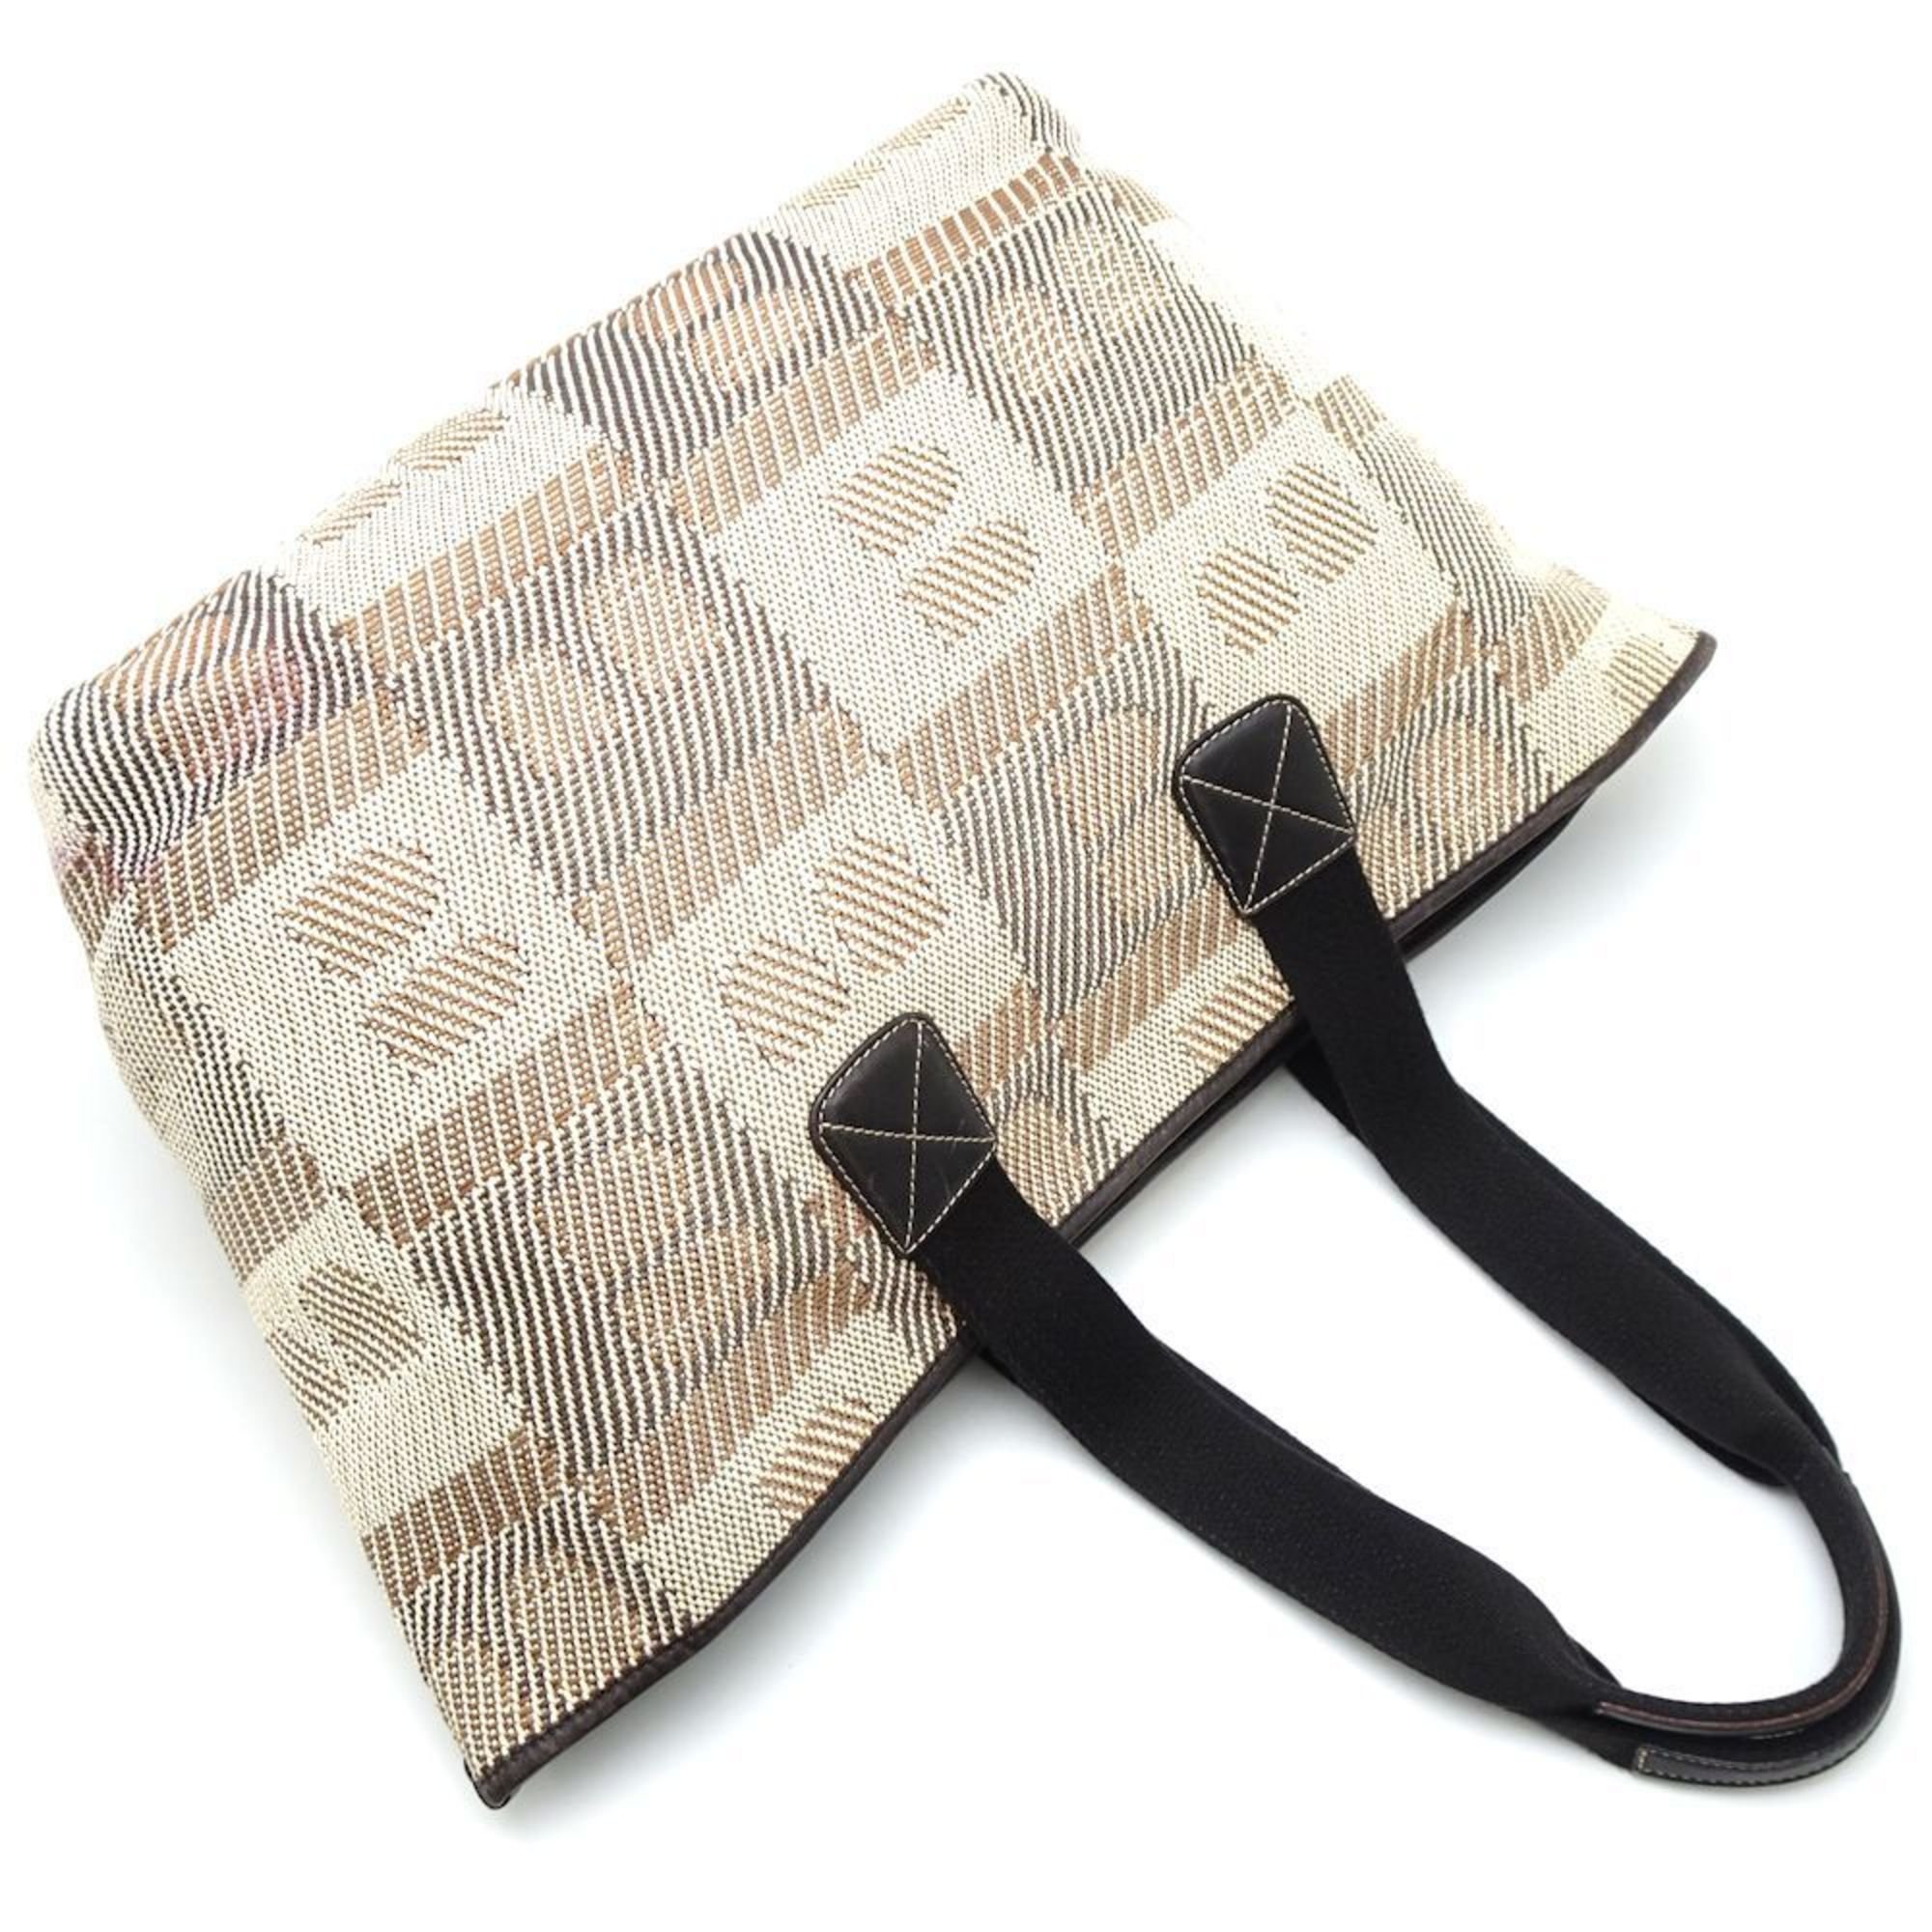 Elegant Canvas Handbag with Timeless Design